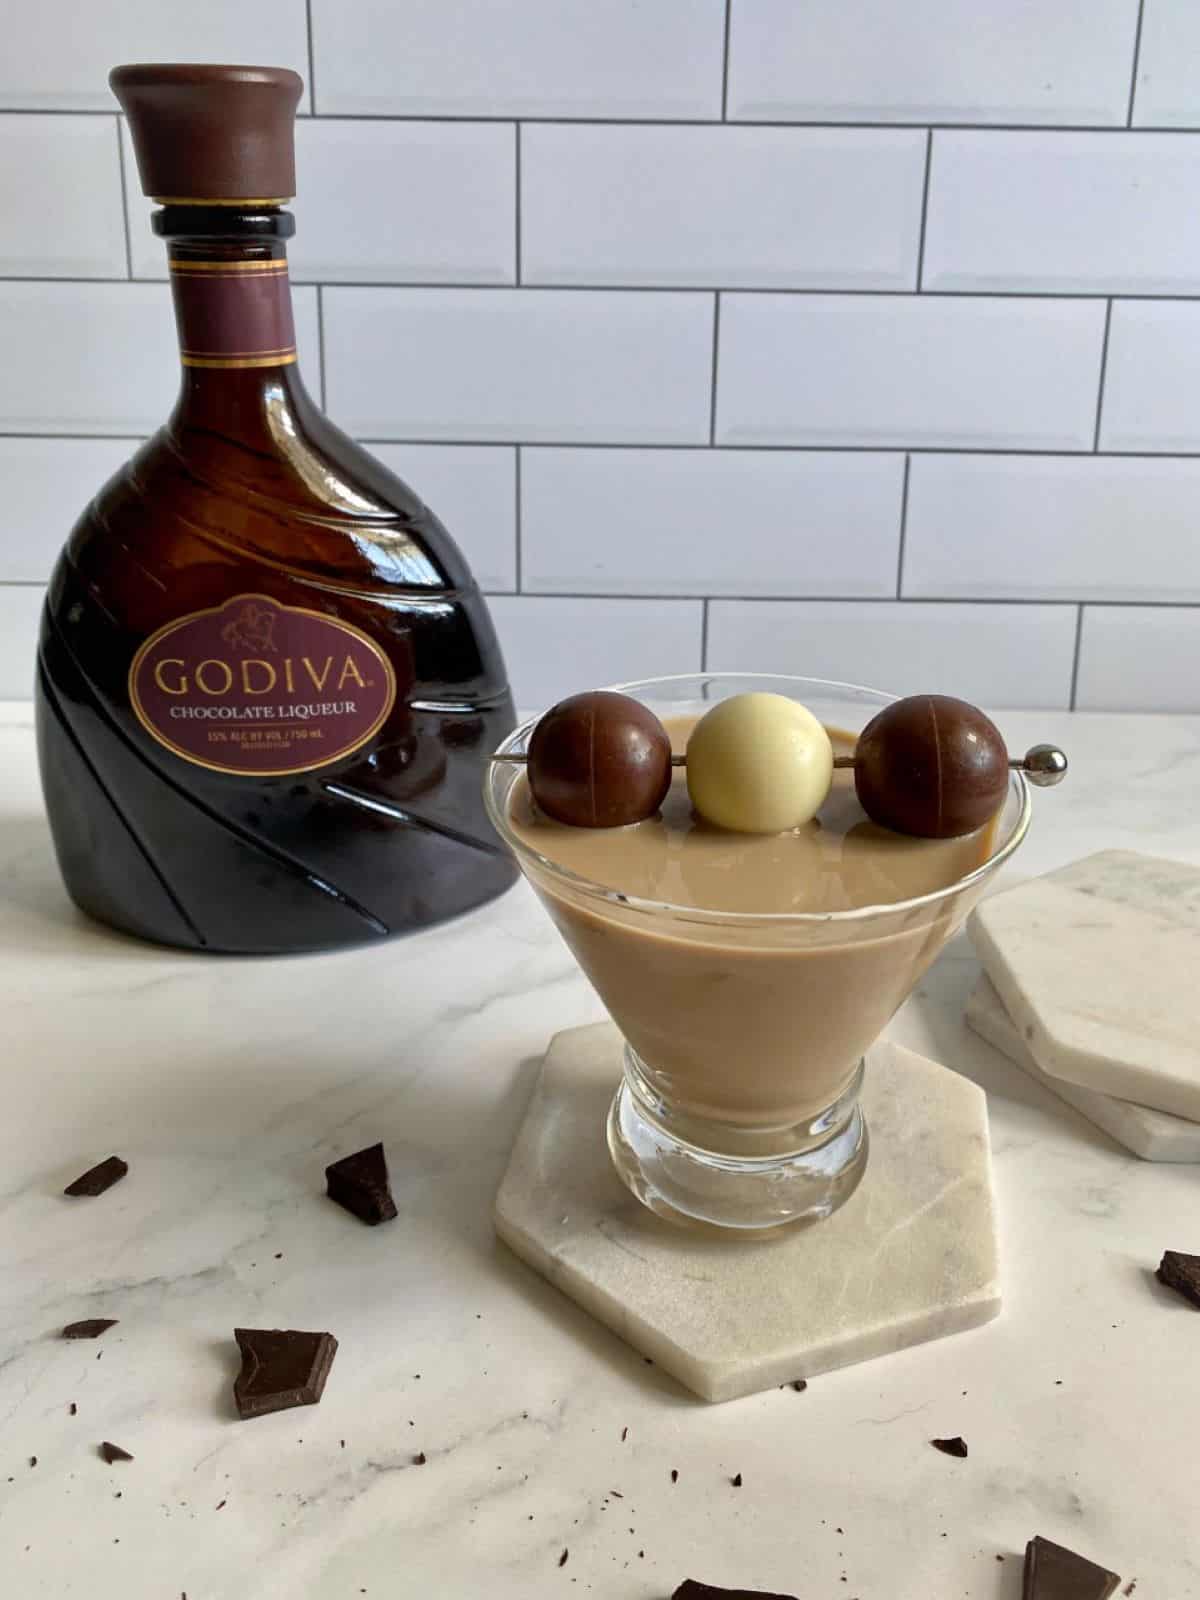 Chocolate Martini with Godiva liqueur and chocolate candy garnish.